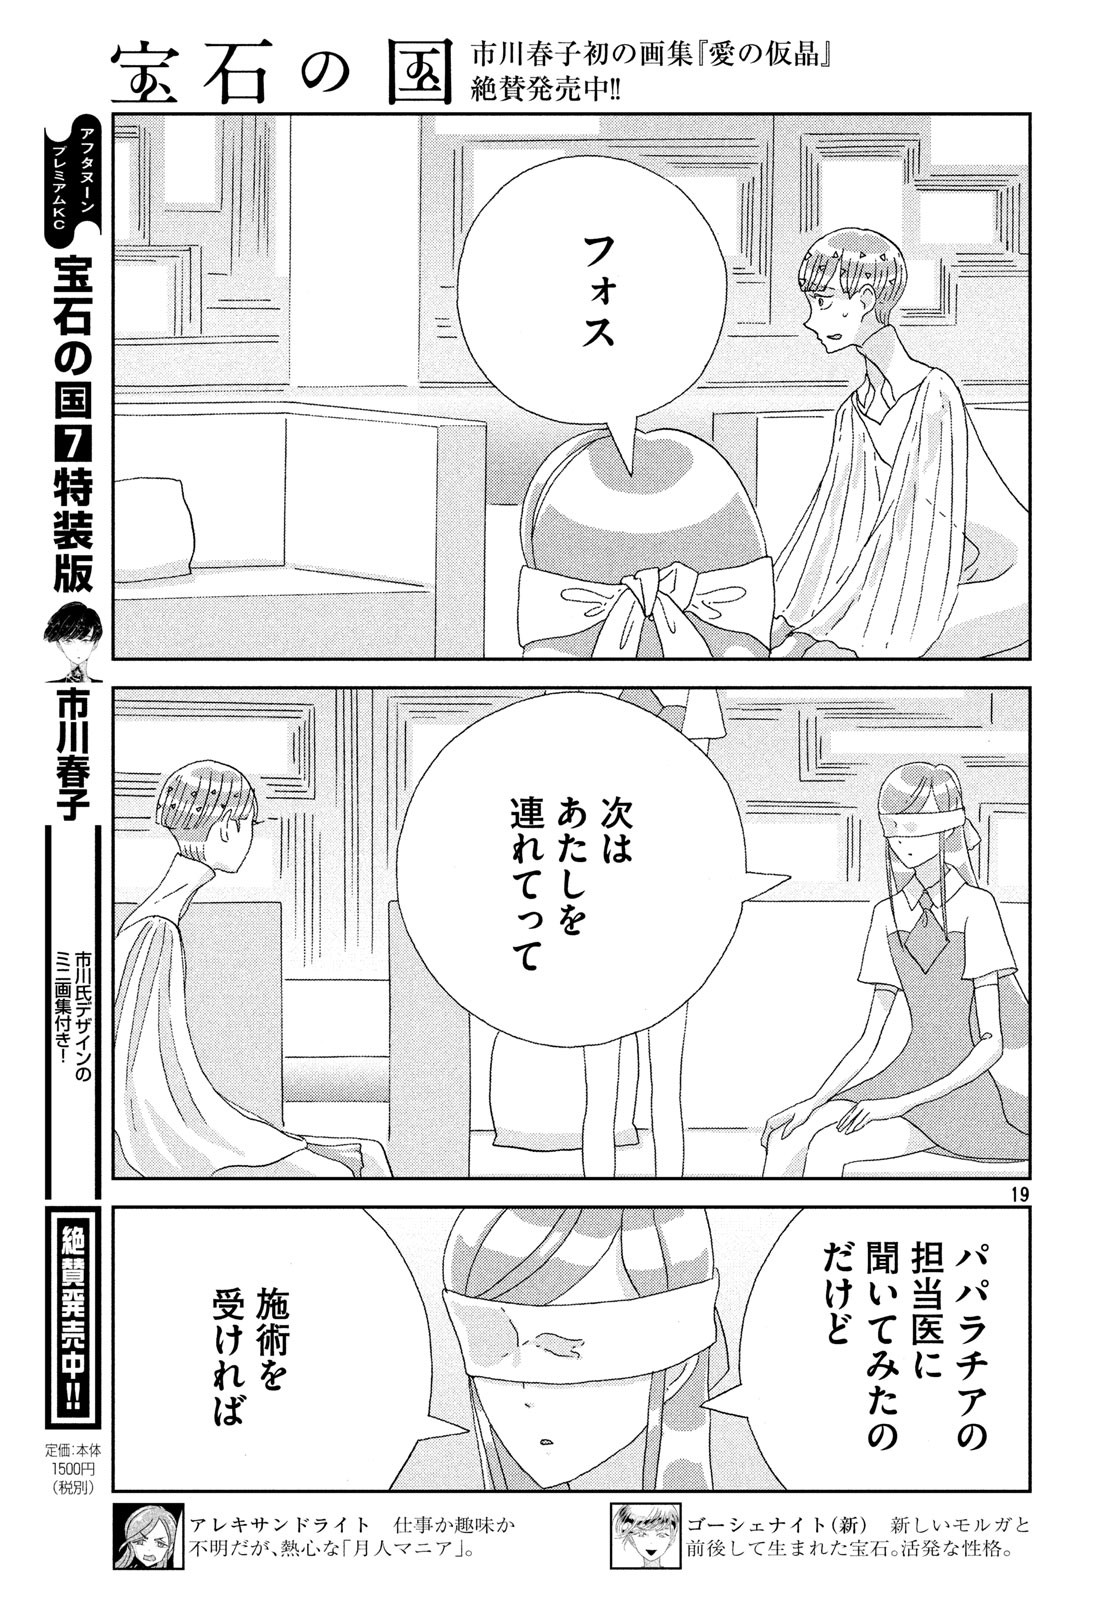 Houseki no Kuni - Chapter 73 - Page 19